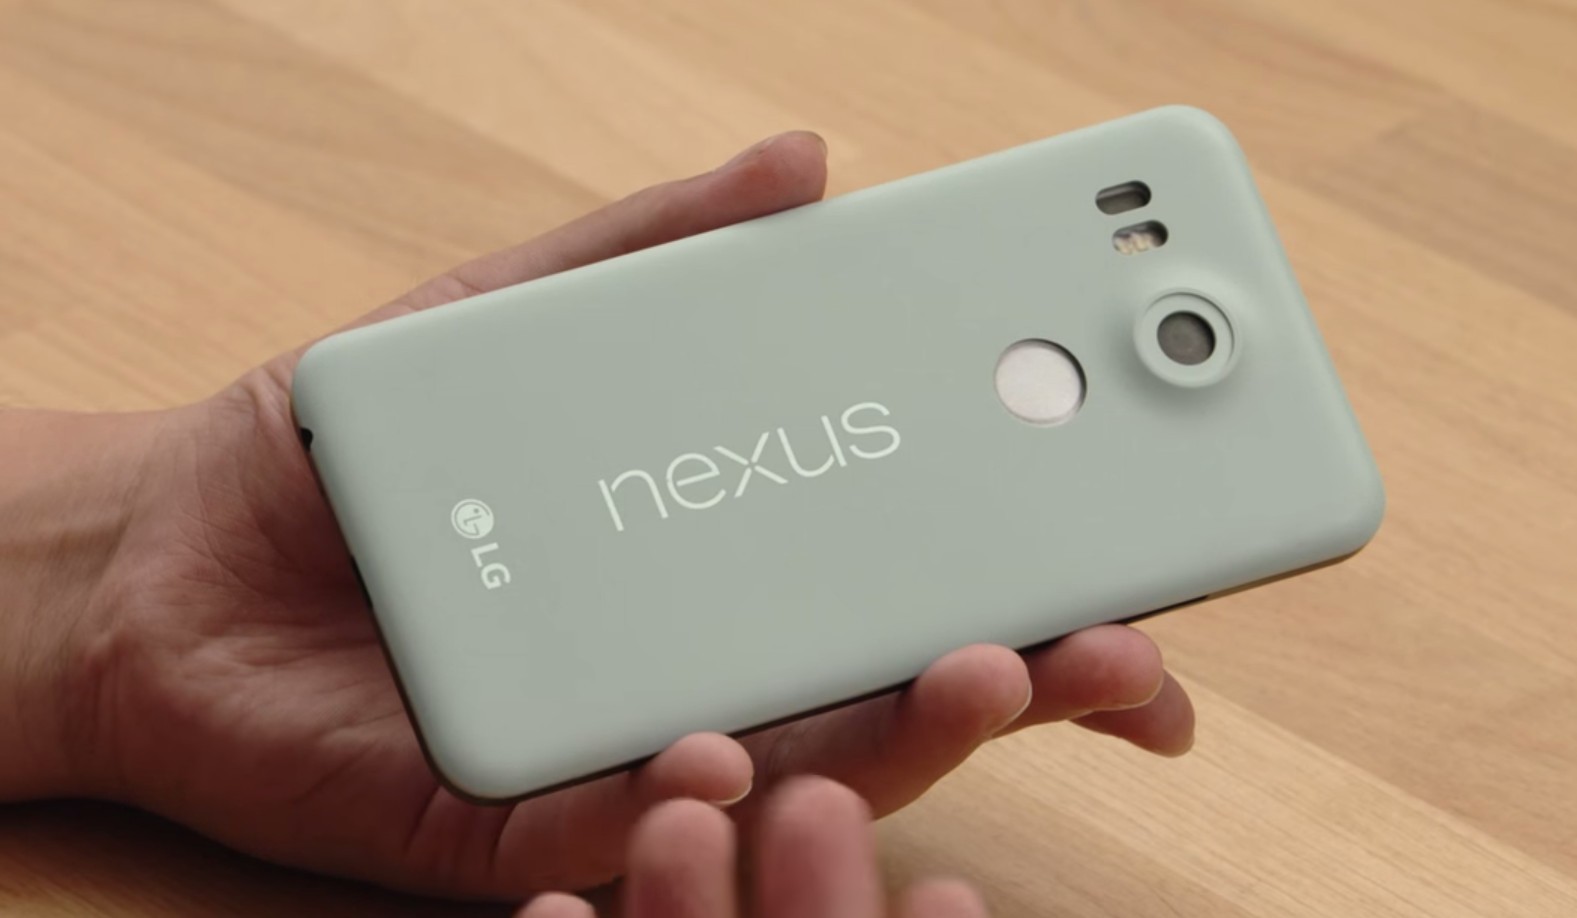 Google Nexus 5x Gets Handled In Demo Video Shows Its Curvy Lines